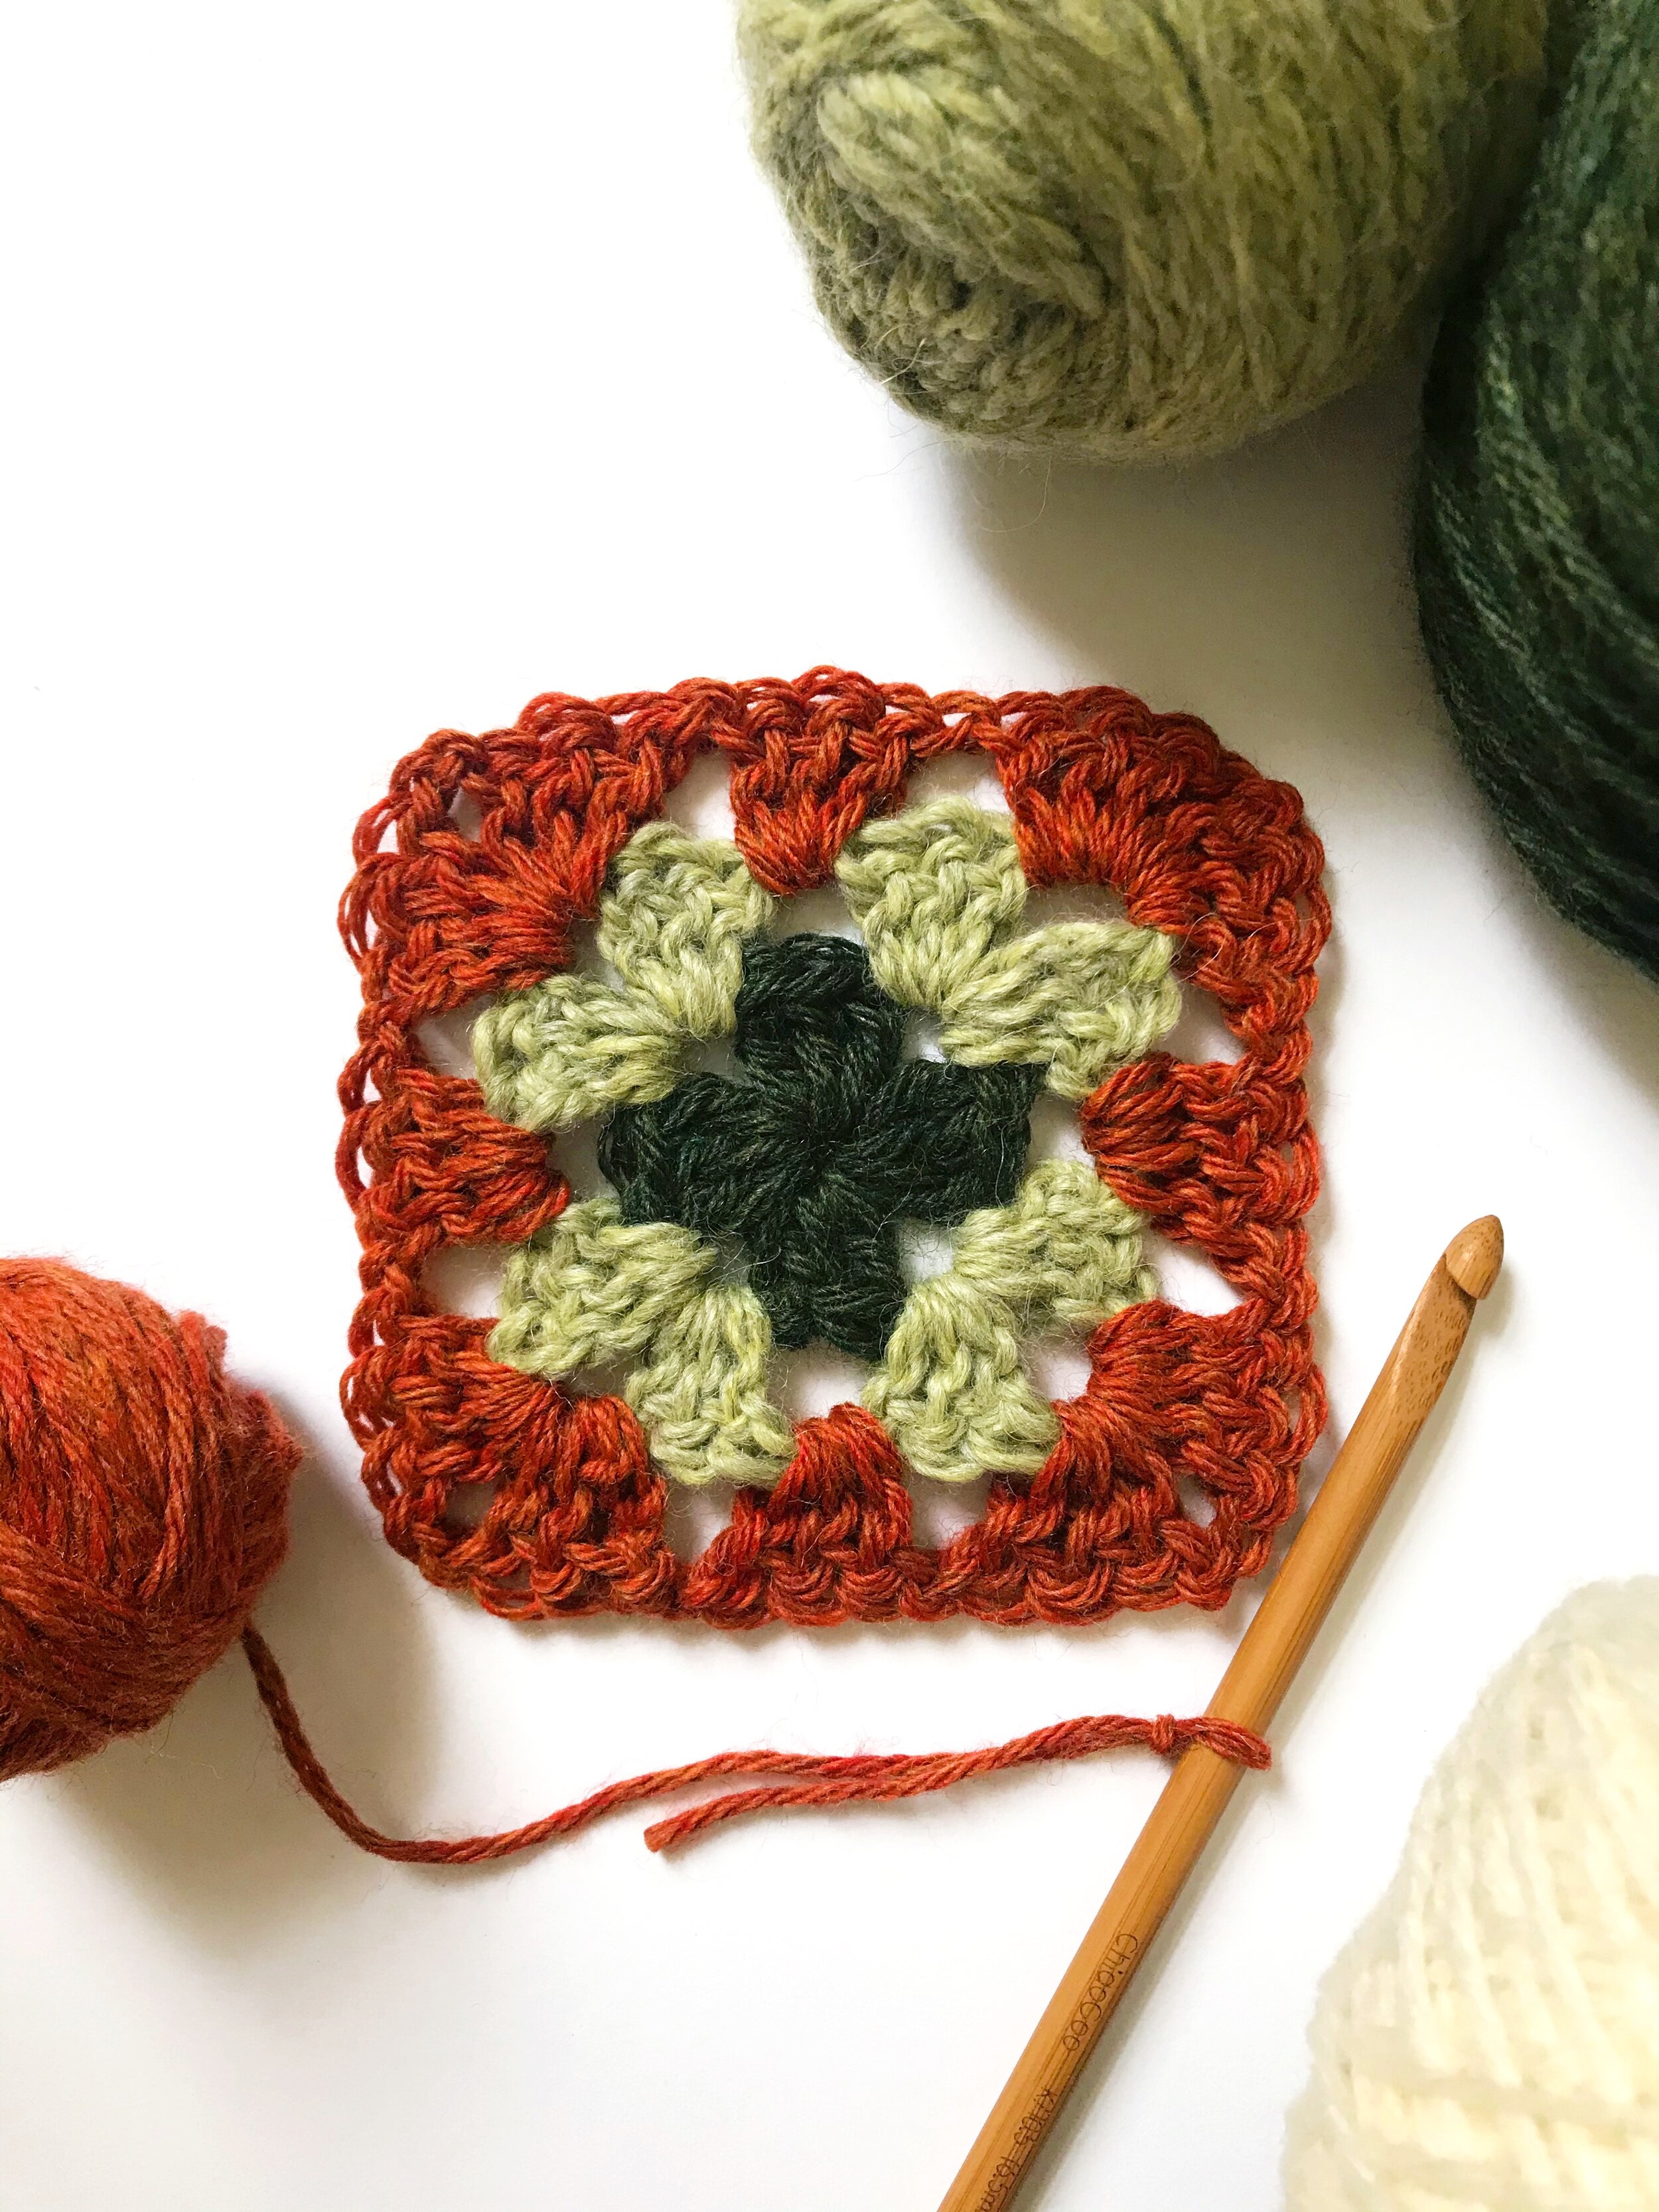 One scrap granny square done, one to go - Crochetbug